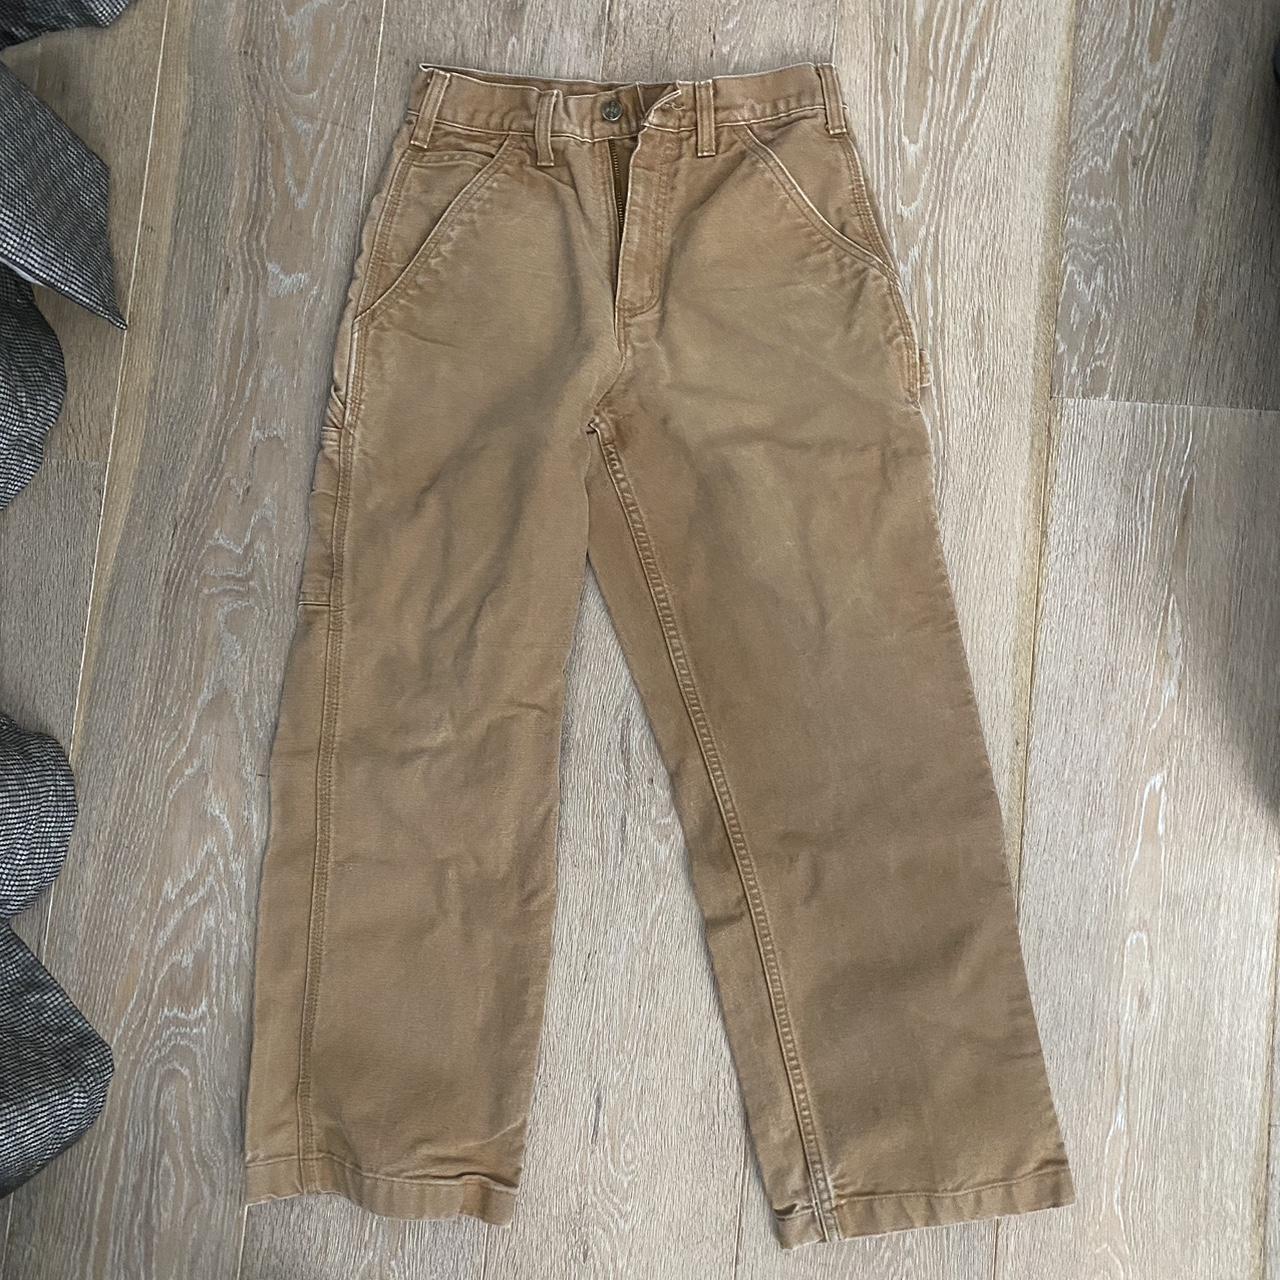 Cartharrt carpenter pants size 28x30 - Depop